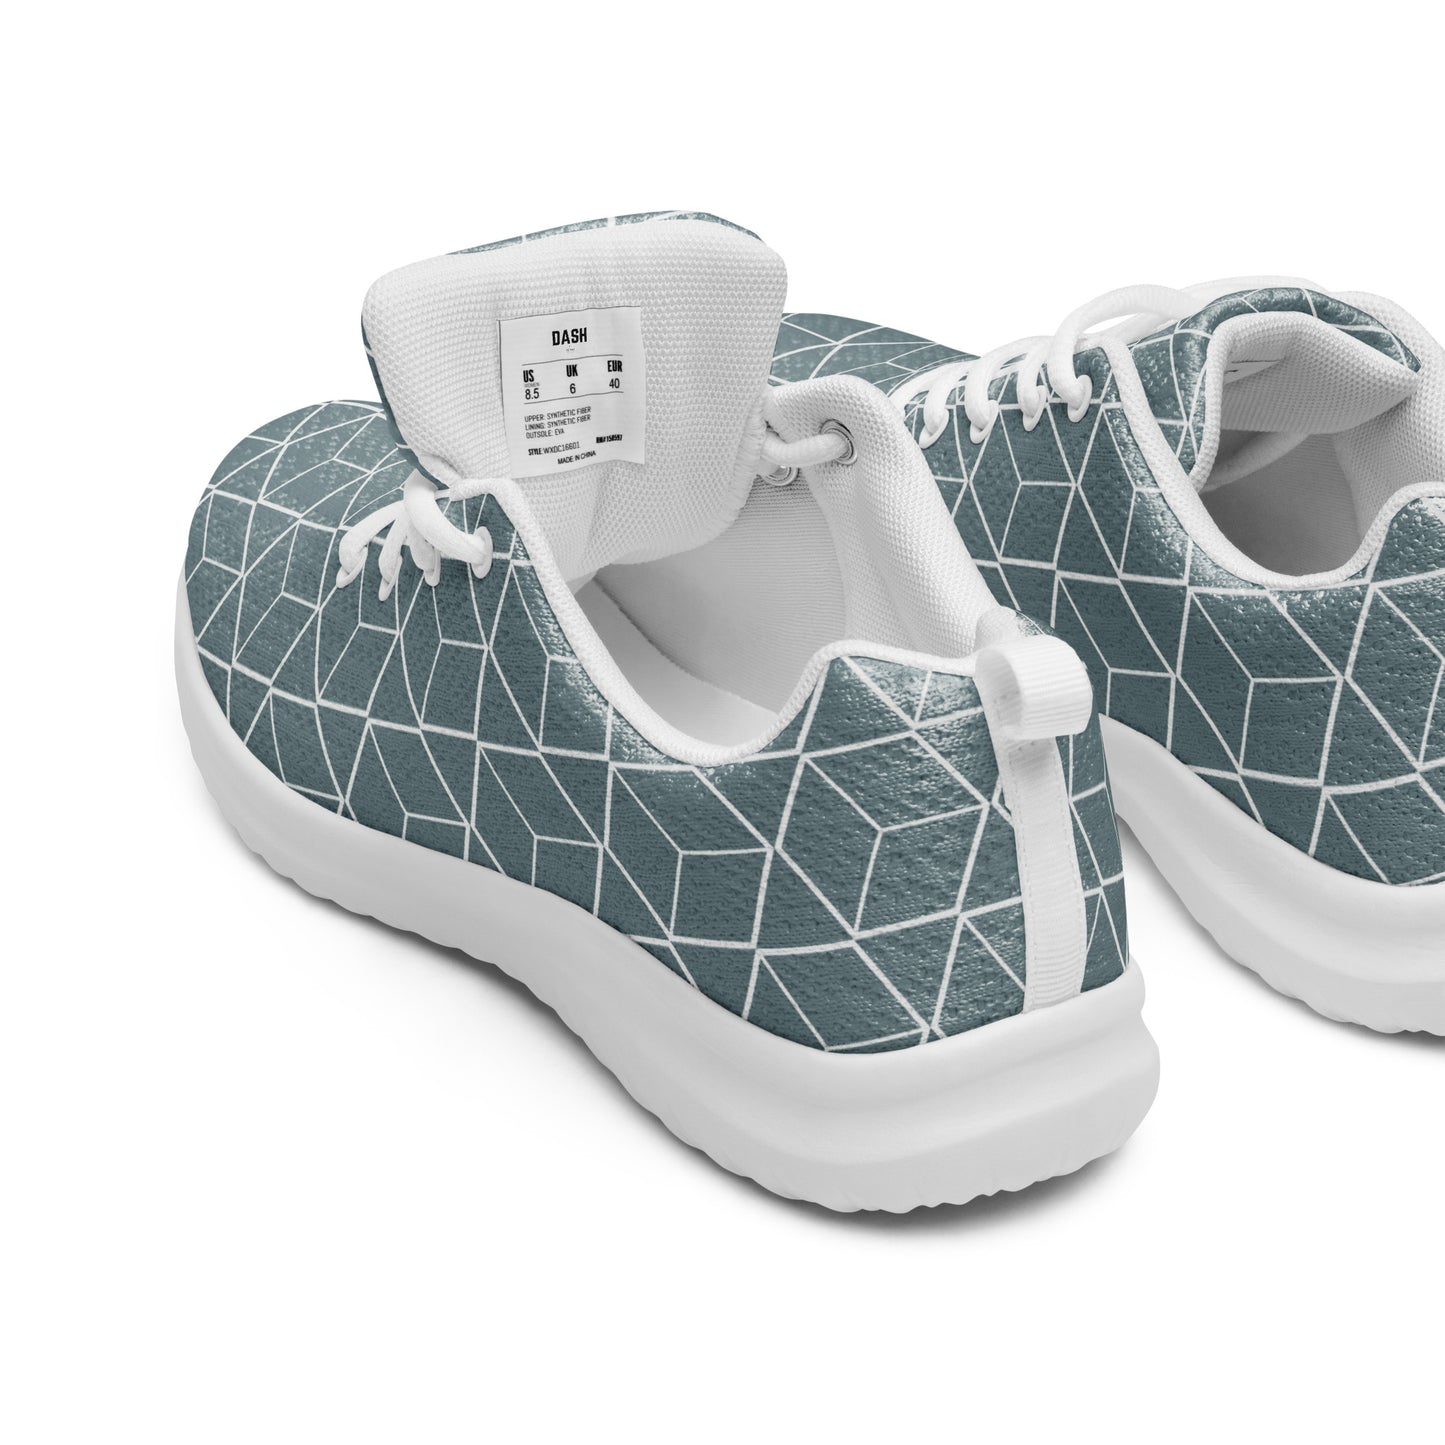 DASH Geo Gothic Men’s Athletic Shoes Lightweight Breathable Design by IOBI Original Apparel